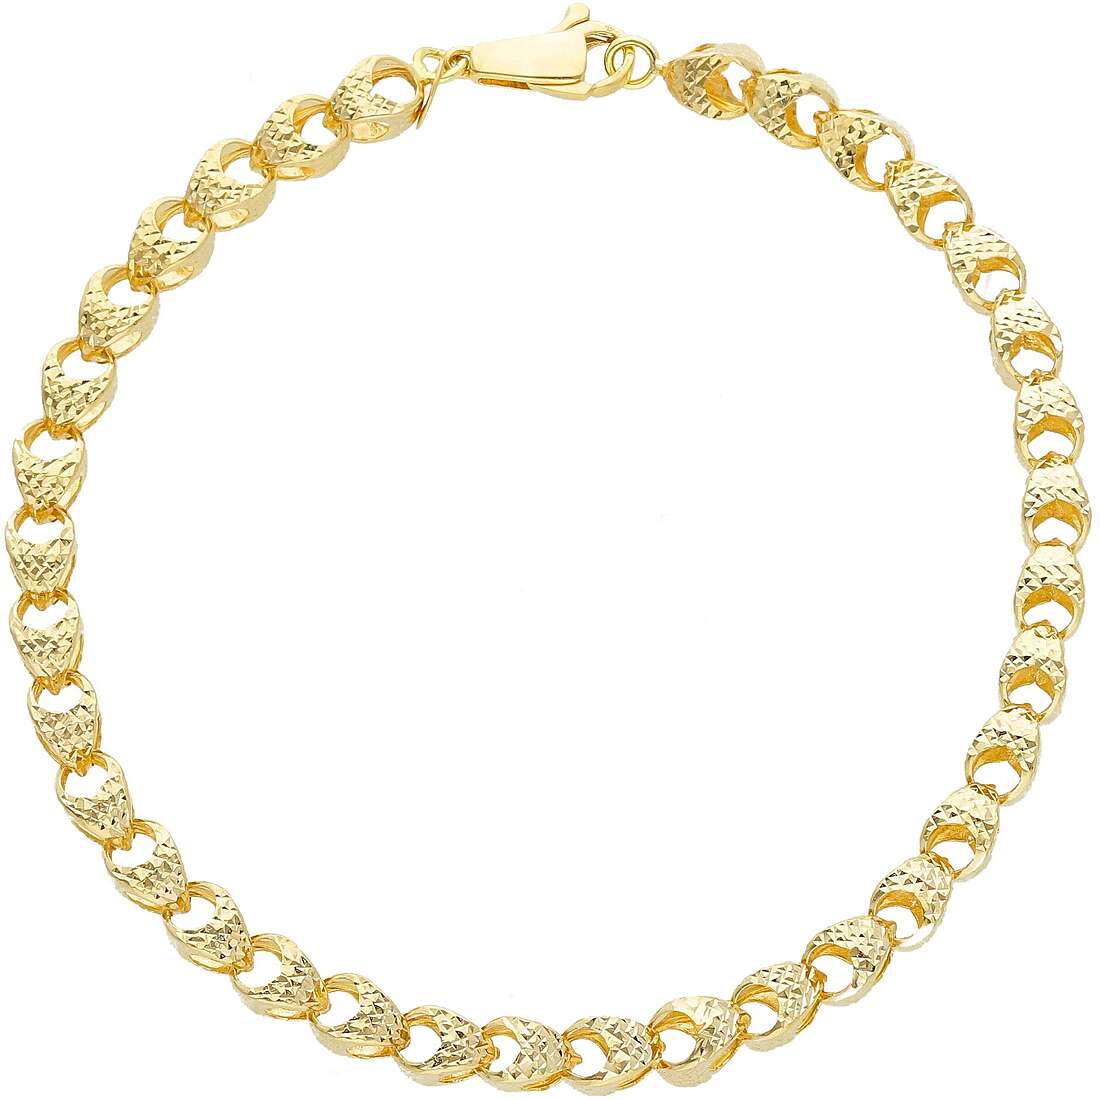 bracelet woman Chain 18 kt Gold jewel GioiaPura Oro 750 GP-S249891